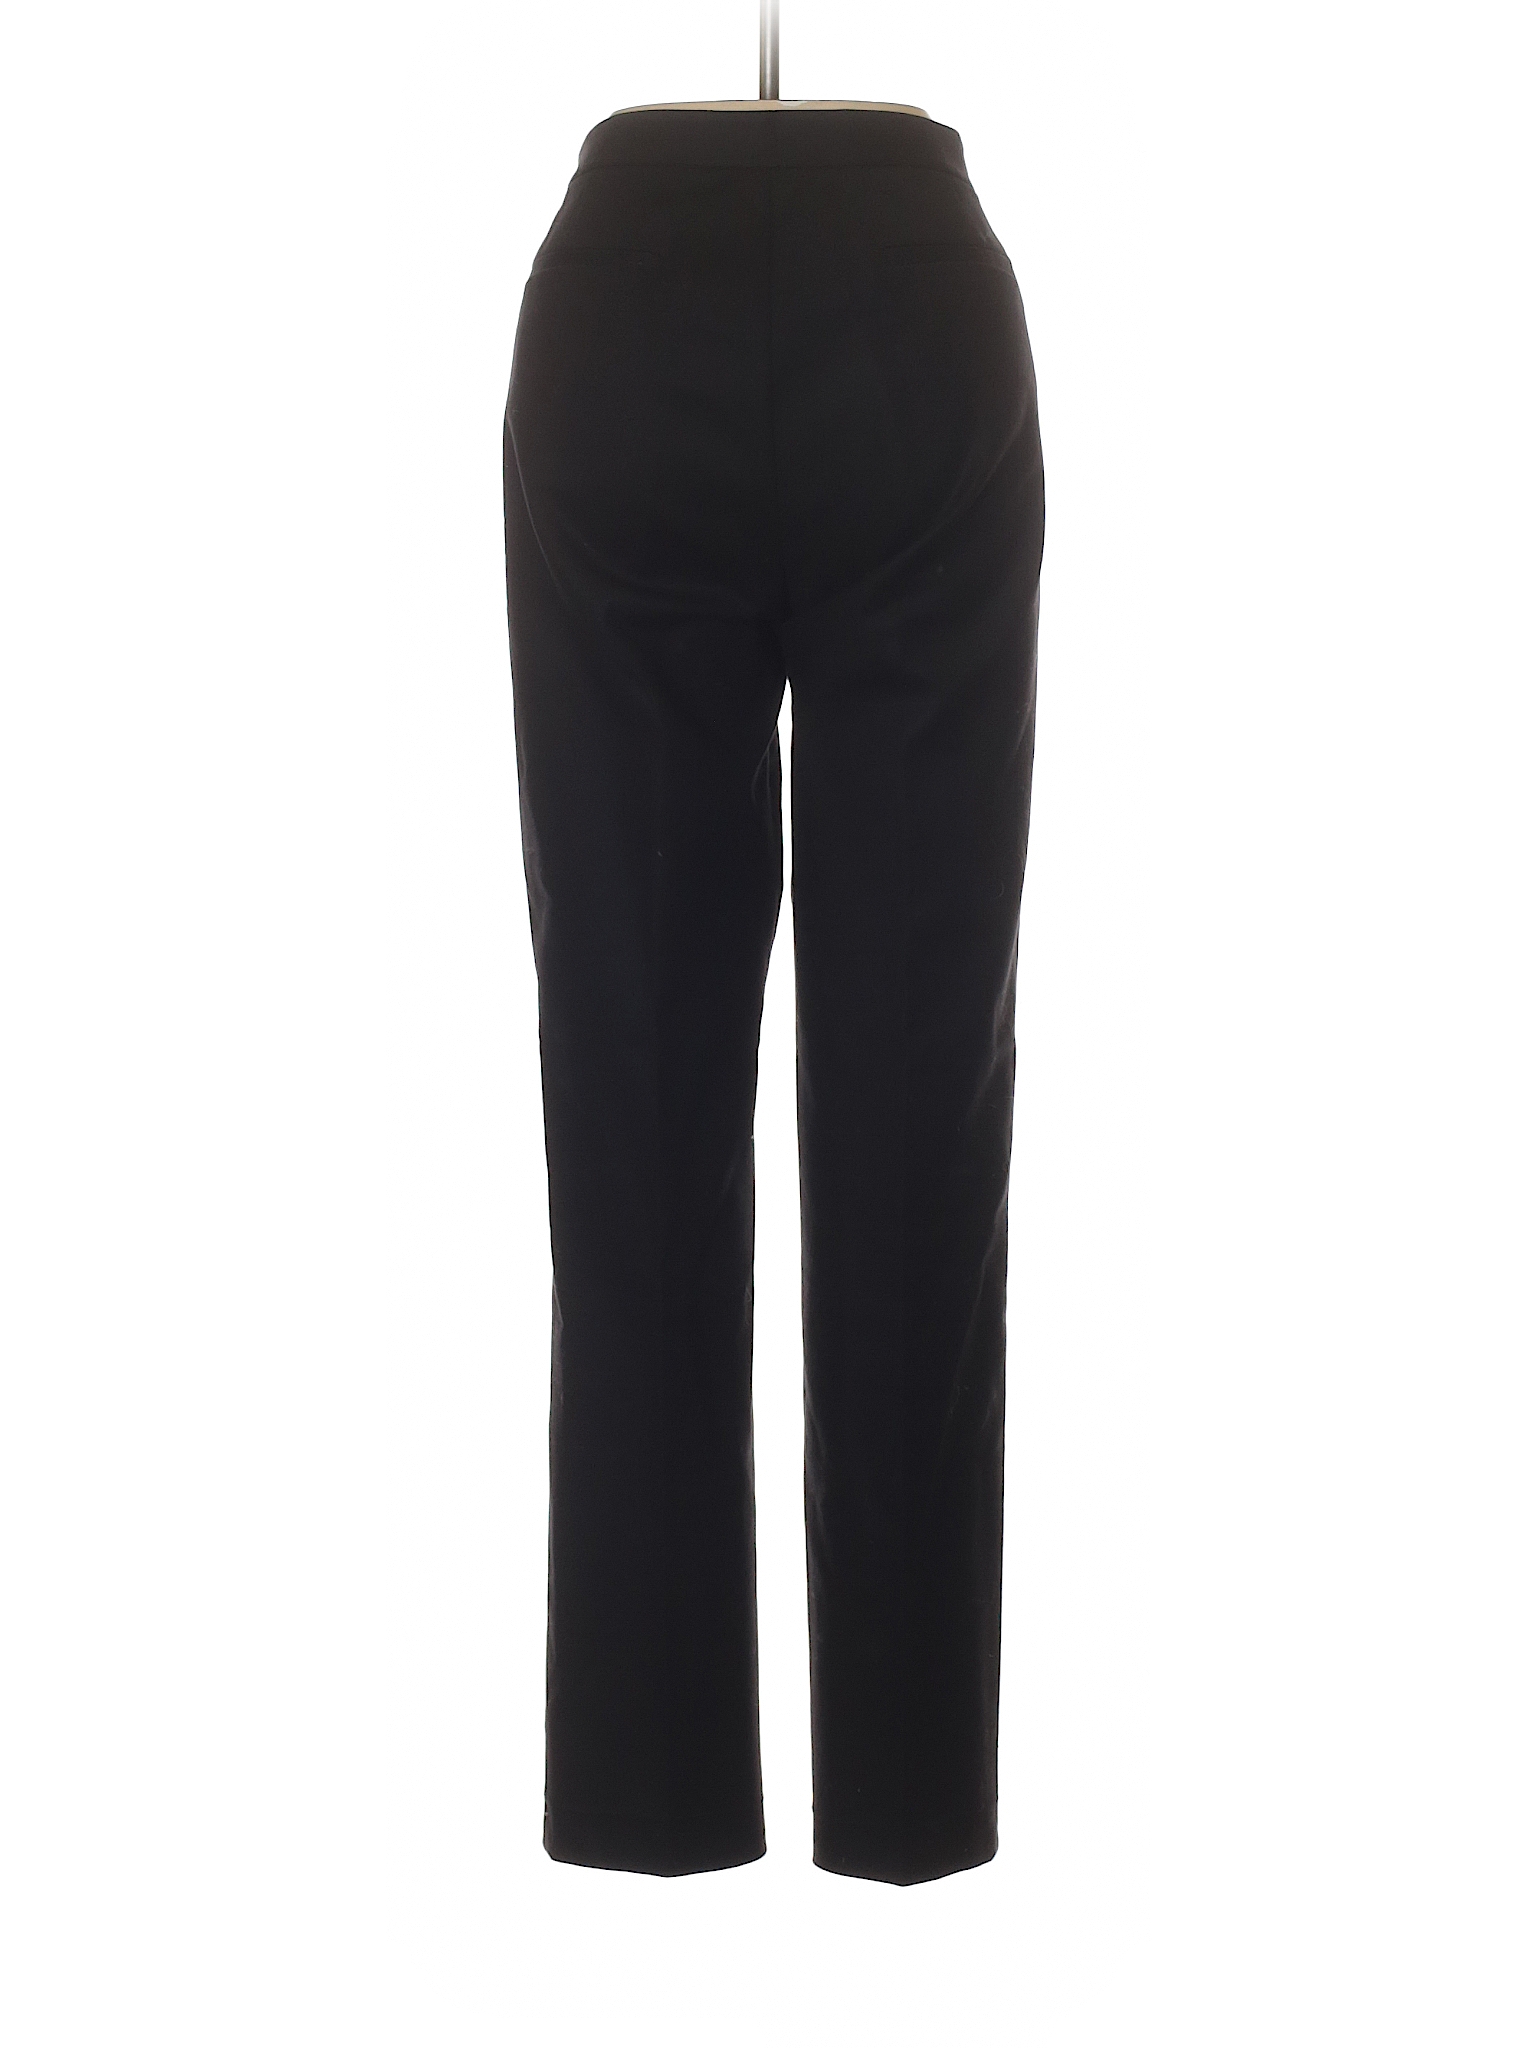 Etcetera Women Black Dress Pants 4 | eBay